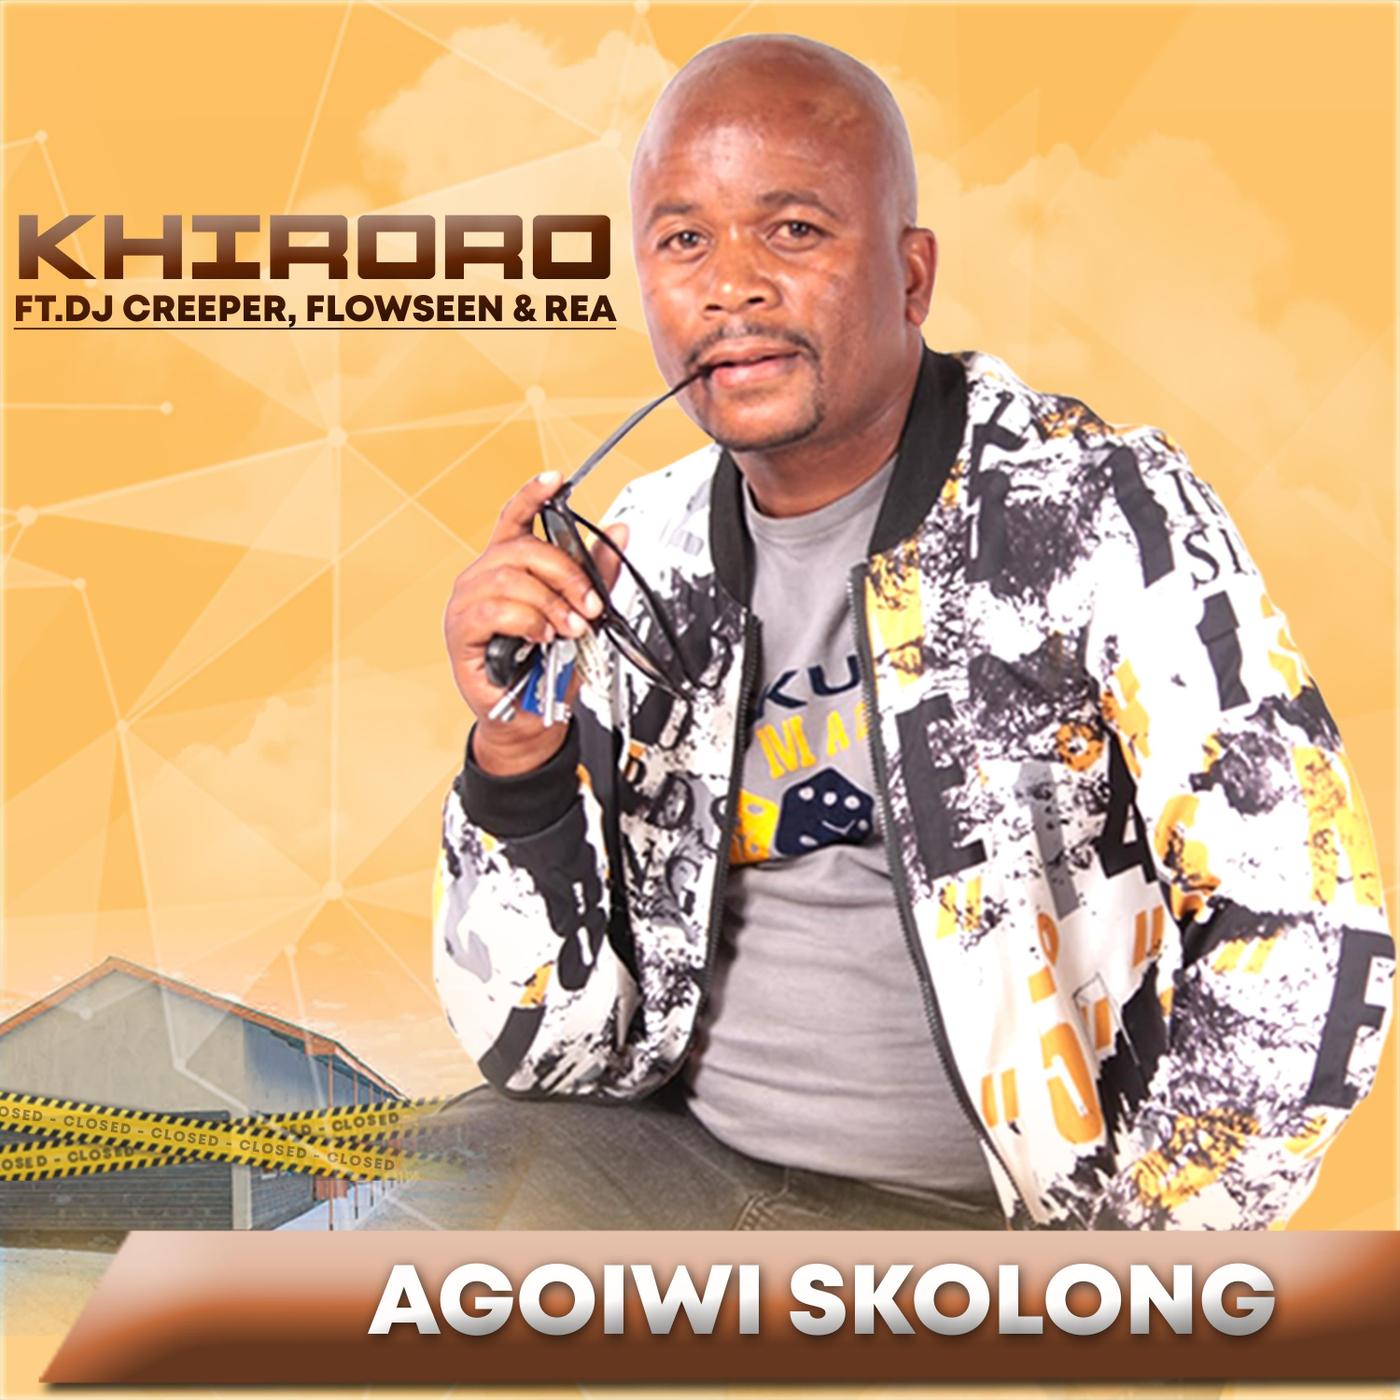 Khiroro - Agoiwi Skolong (feat. Dj Creeper, Flowseen & Rea)